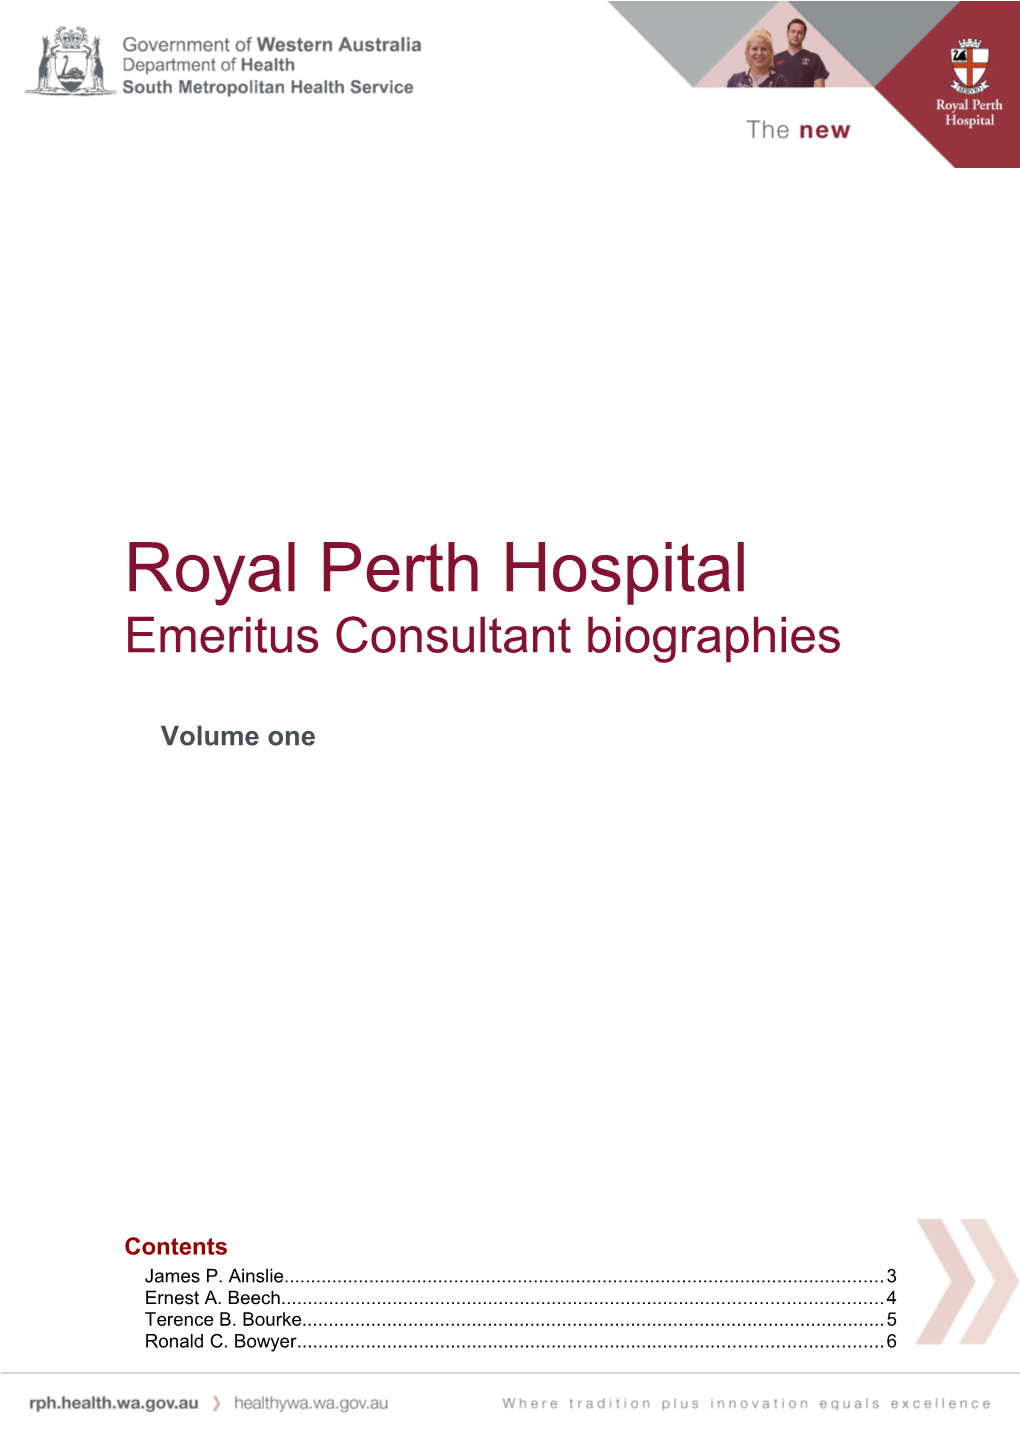 Royal Perth Hospital Emeritus Consultant Biographies